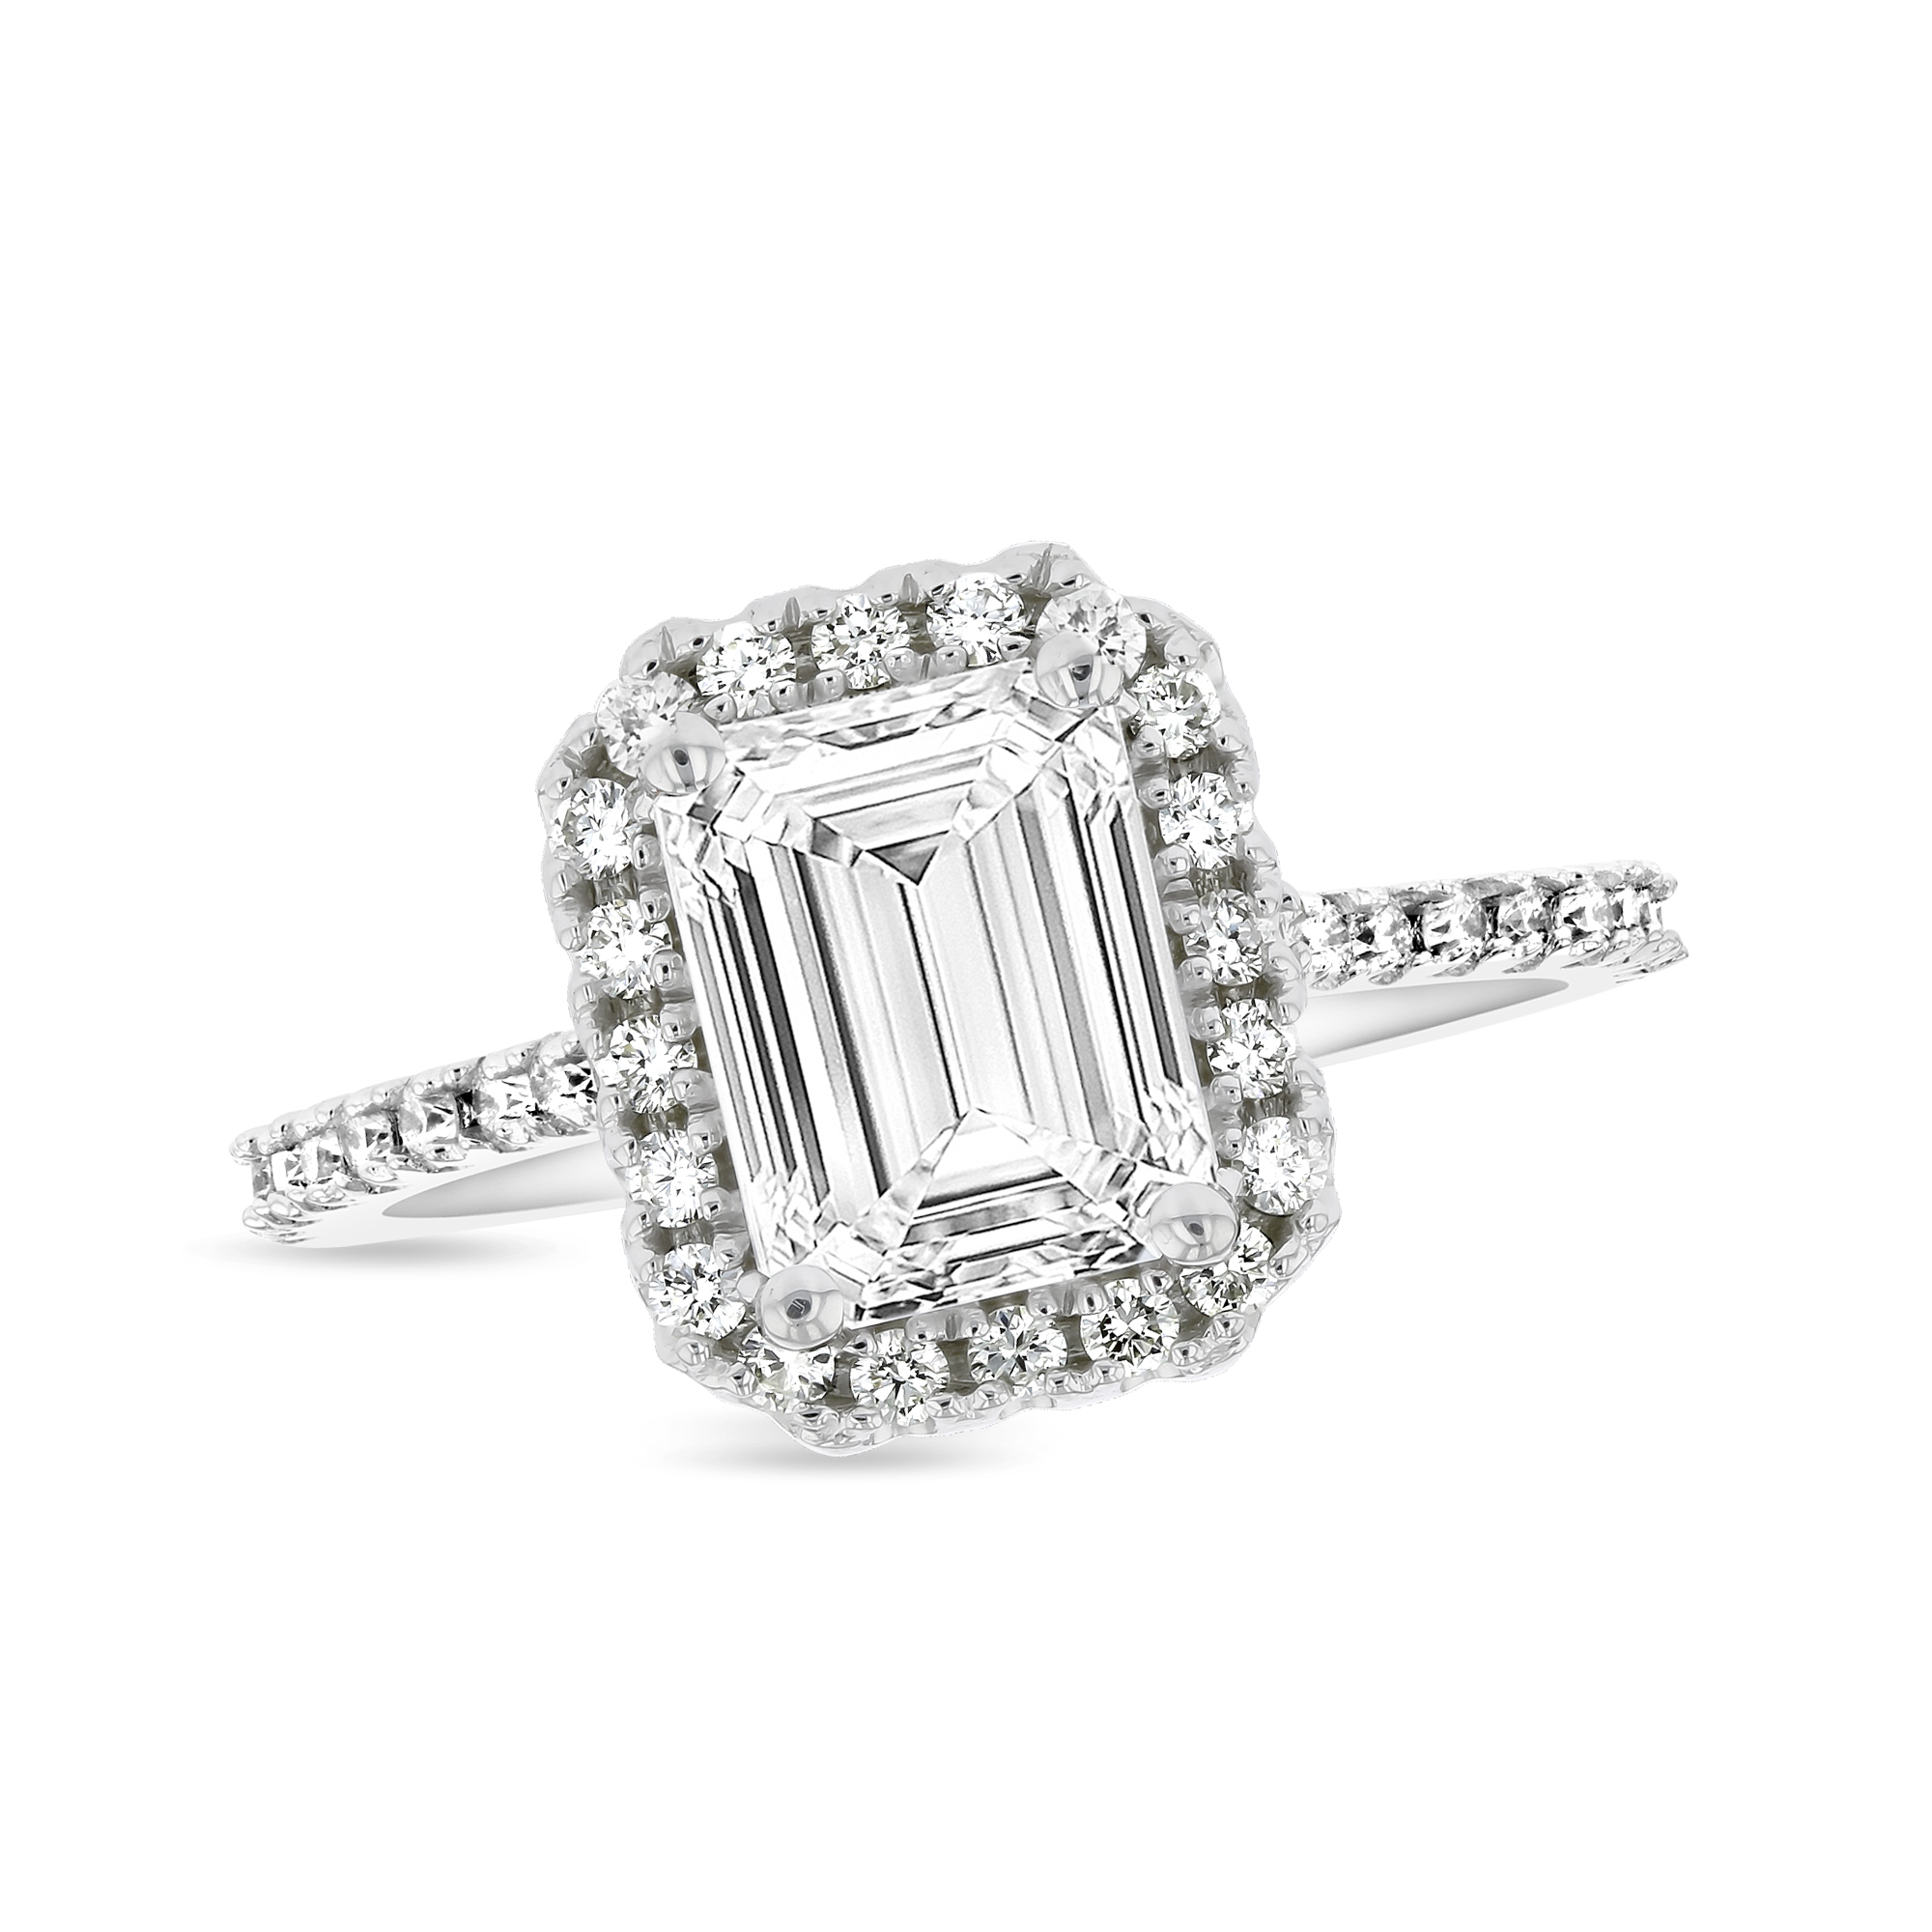 View 0.50ctw Diamond Emerald Cut Halo Semi Mount Ring in 14k White Gold